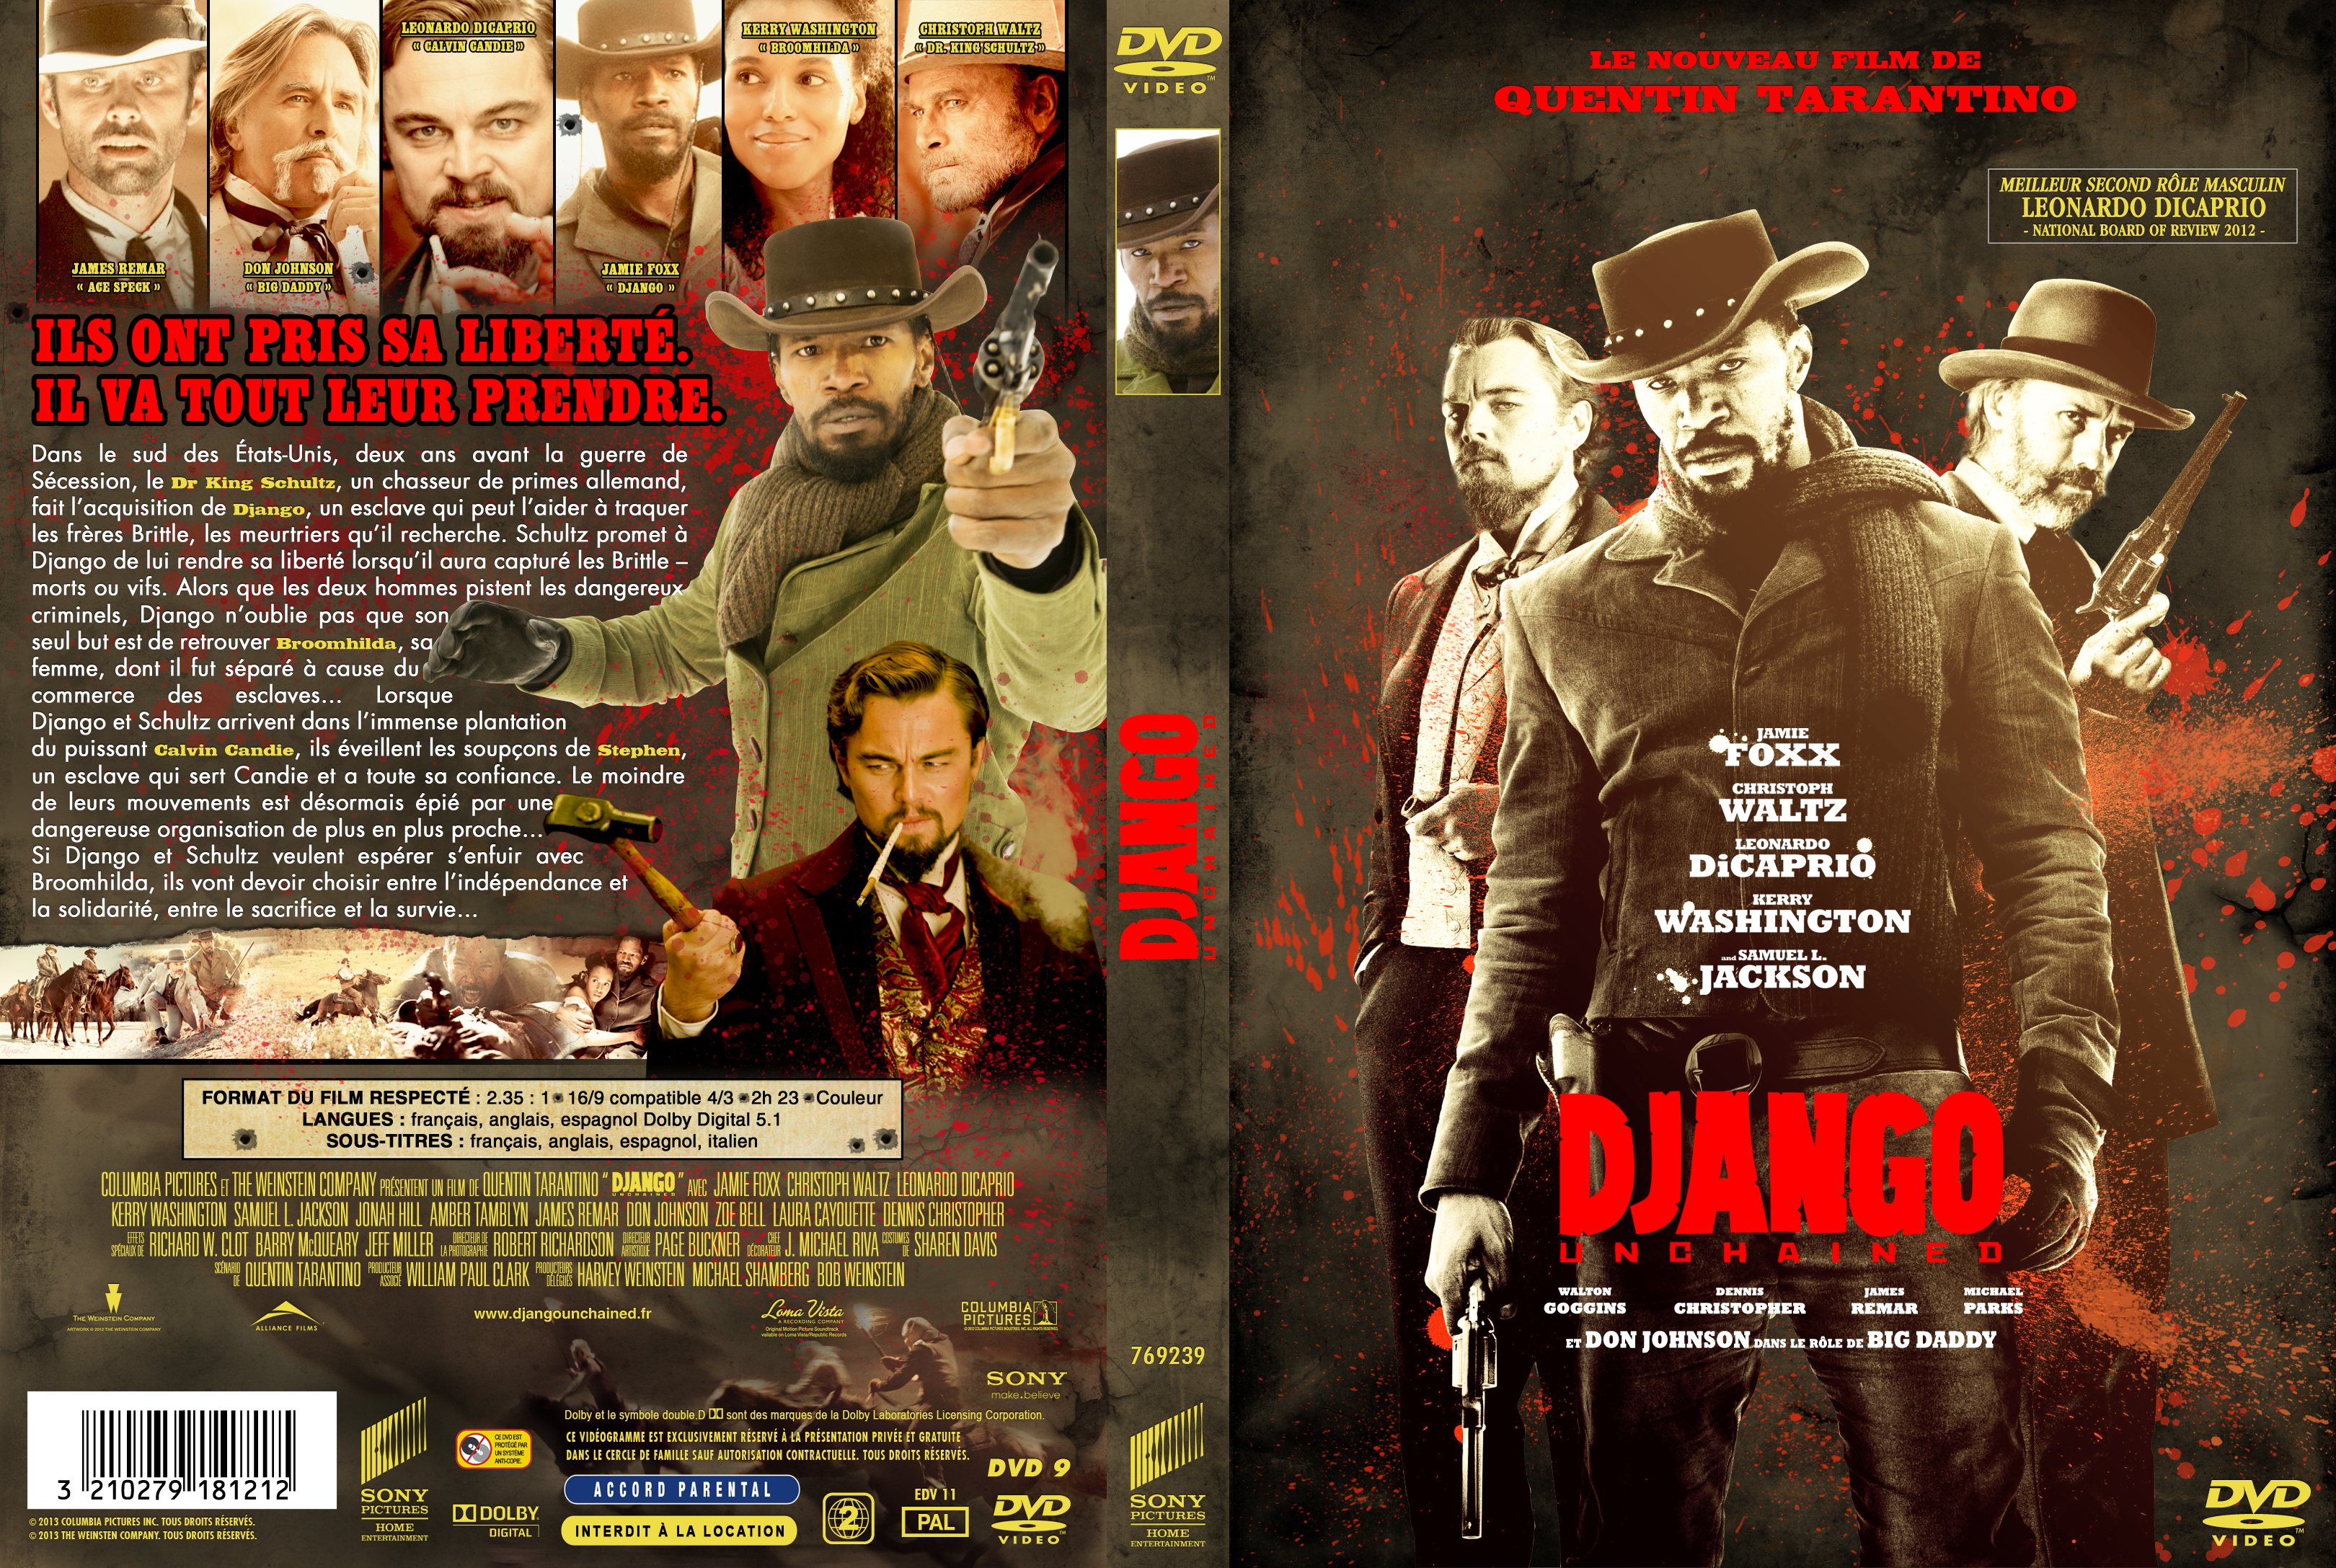 Jaquette DVD Django unchained custom v2